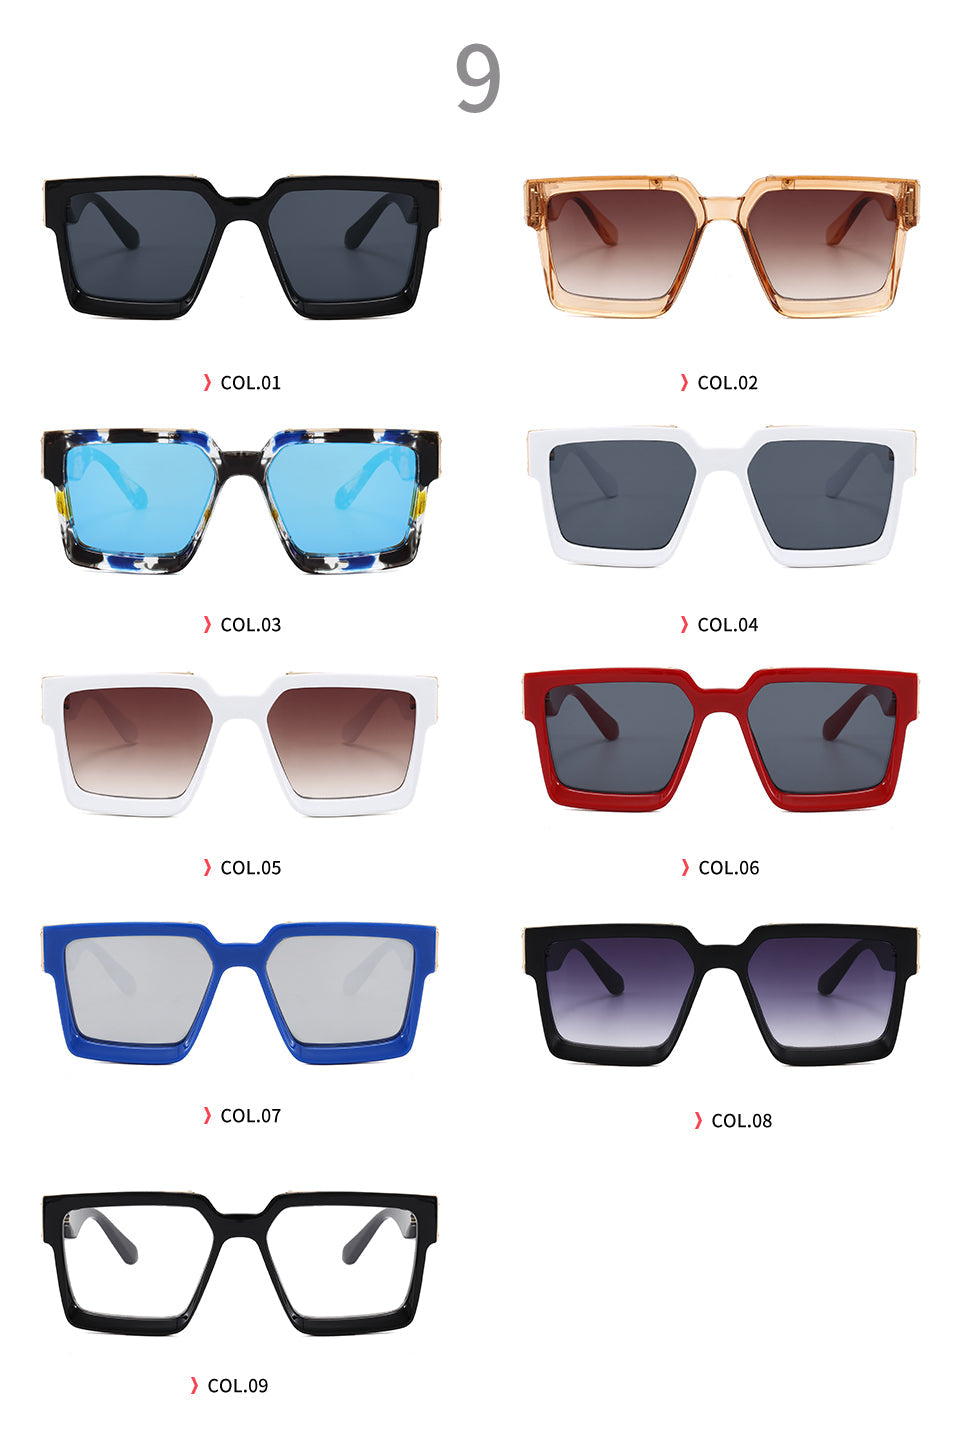 Gradient Lens Sunglasses, BAILEY UNISEX Sunglasses